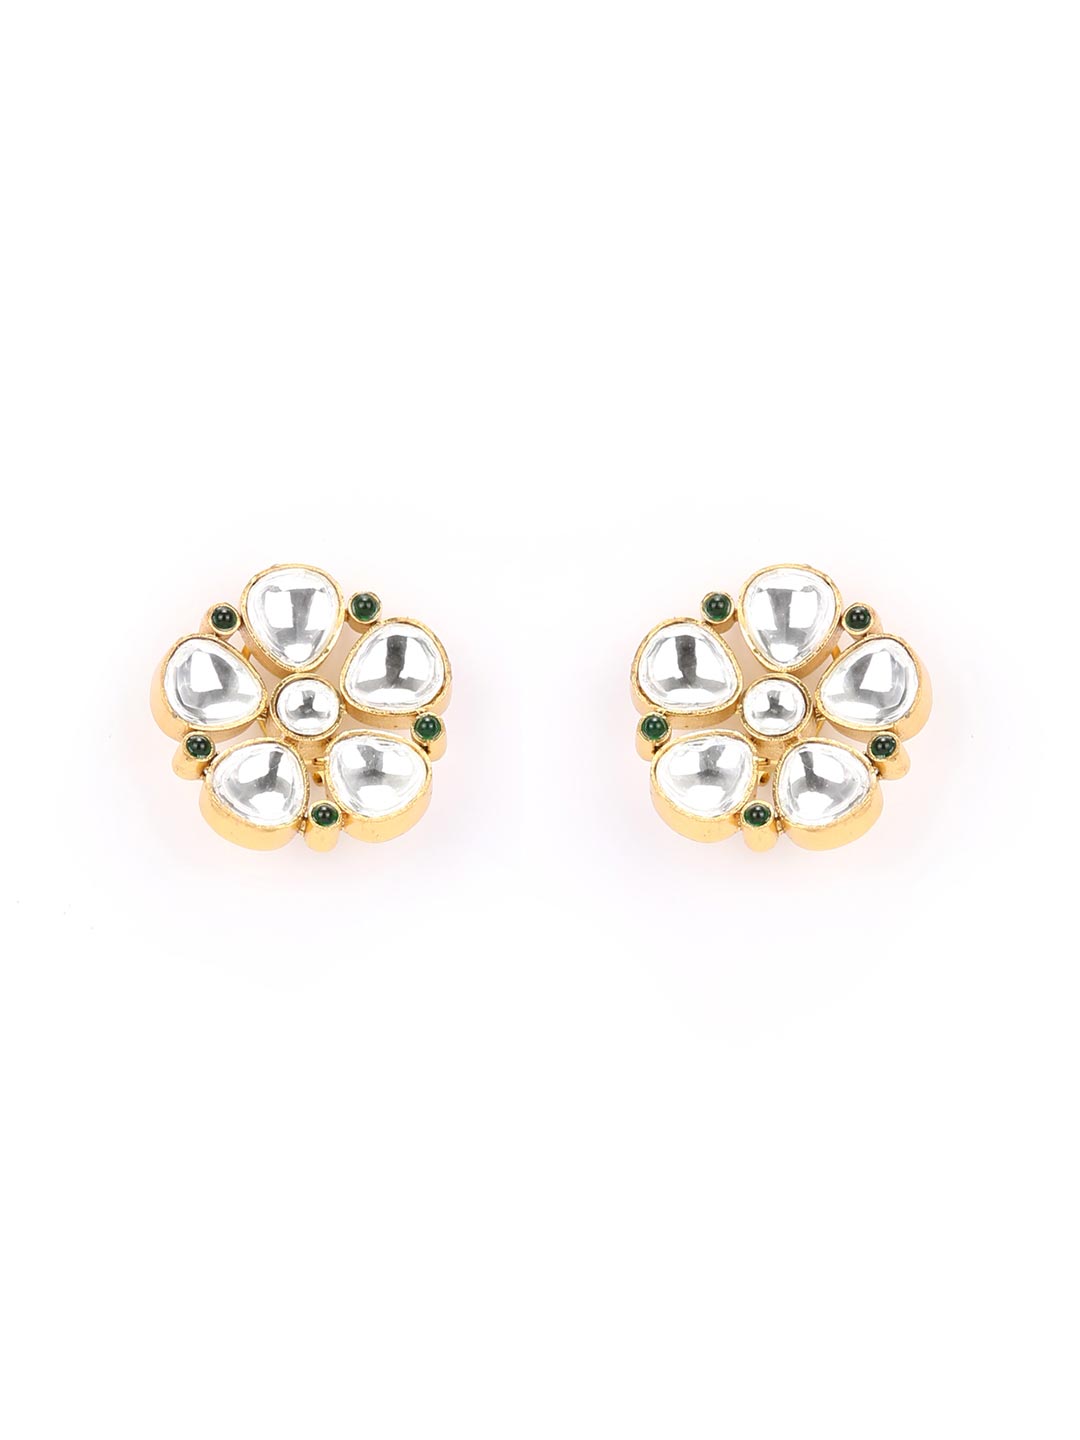 Buy 10pcs Real Gold Plated Brass Flower Earrings, Tiny Daisy Earrings,leaf  Ear Post, Gold Flower Post Earrings,earring Accessories Online in India -  Etsy